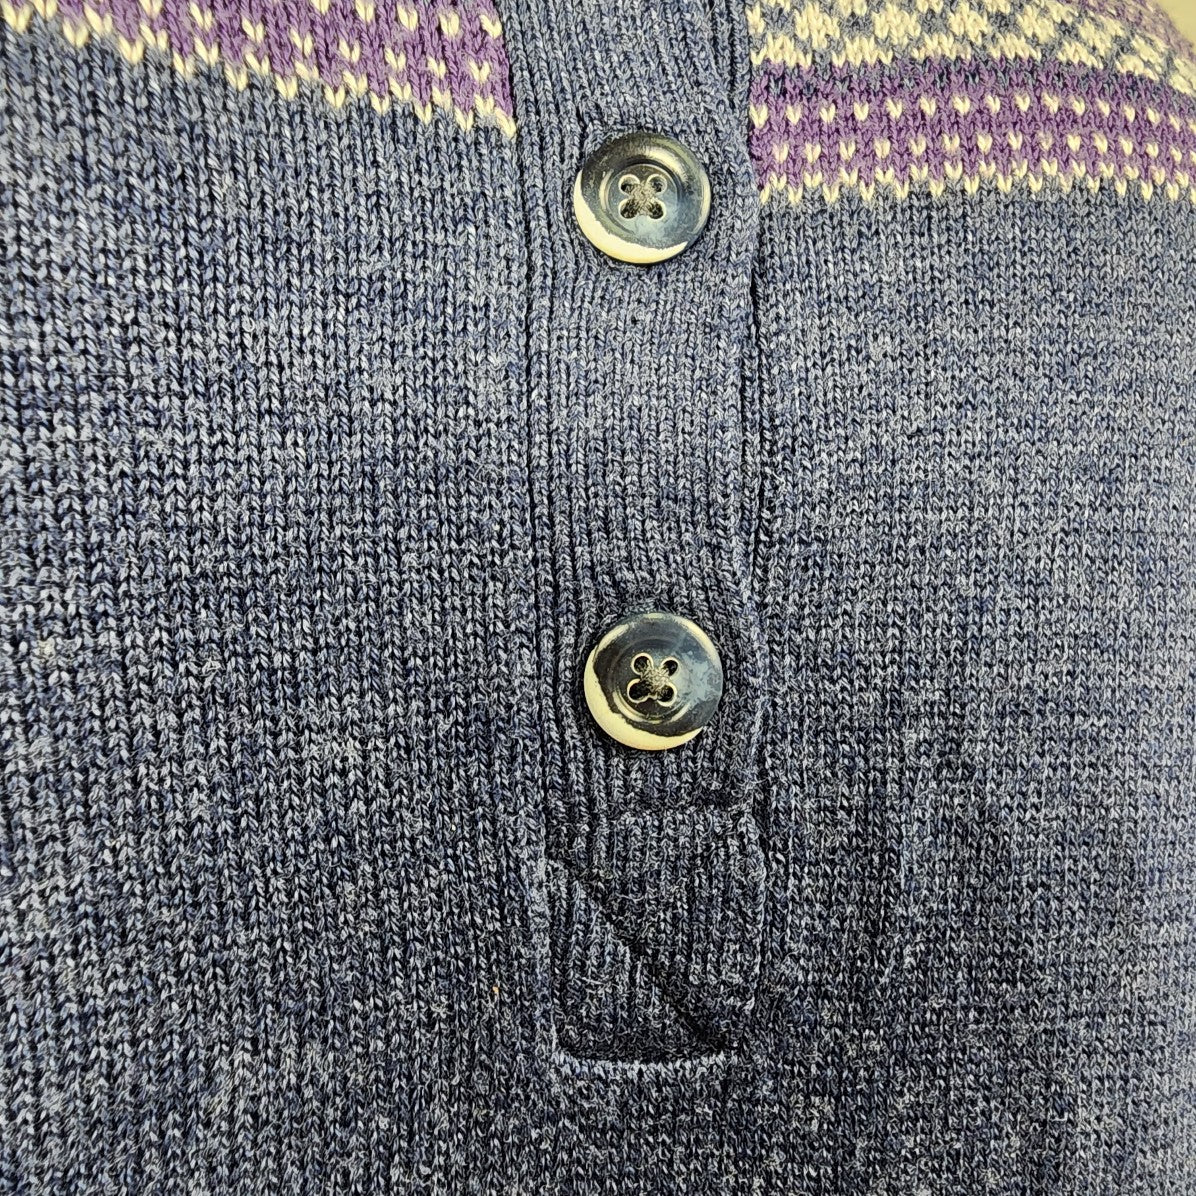 Woodrich Blue & Purple Striped Cotton Knit Button Down Sweater Size L